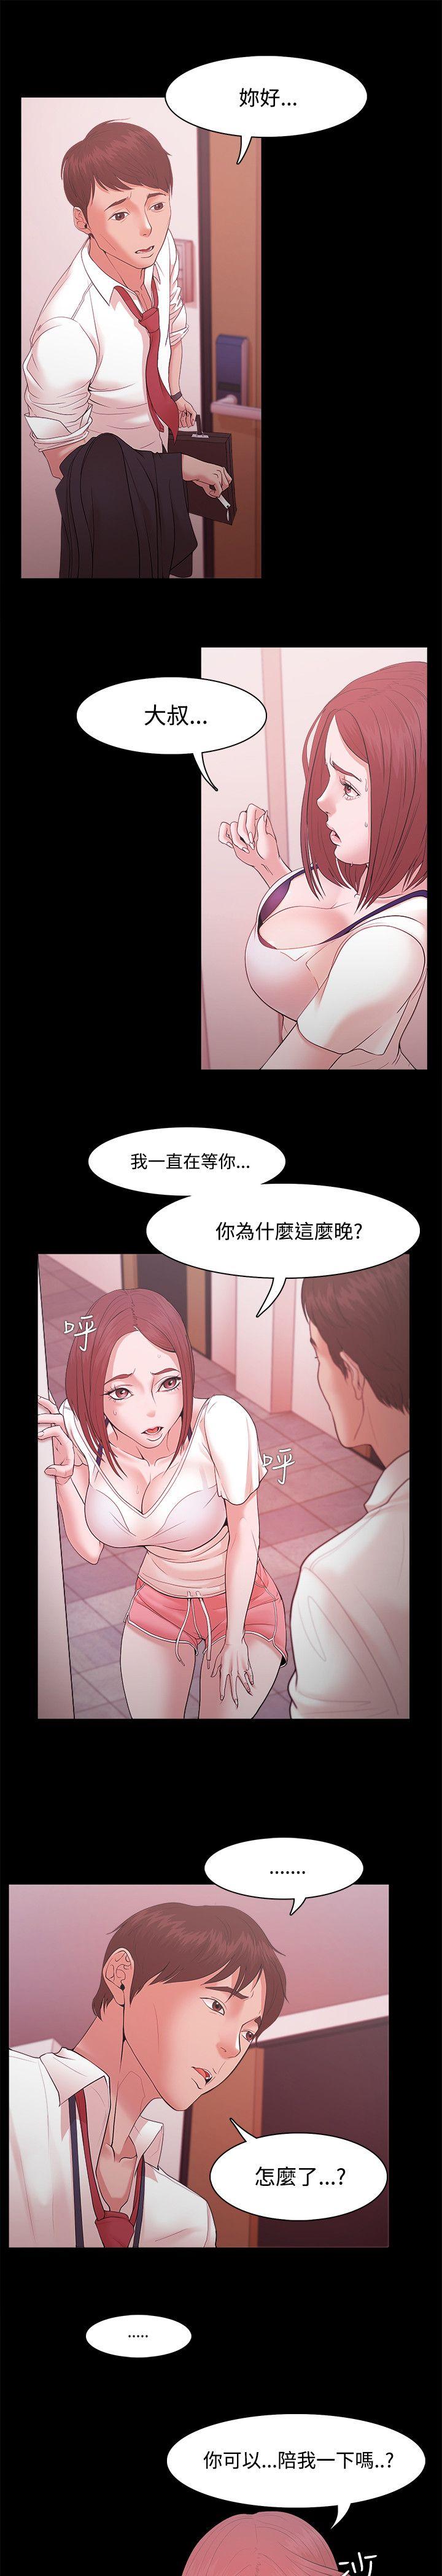 韩国污漫画 Loser 第16话 11